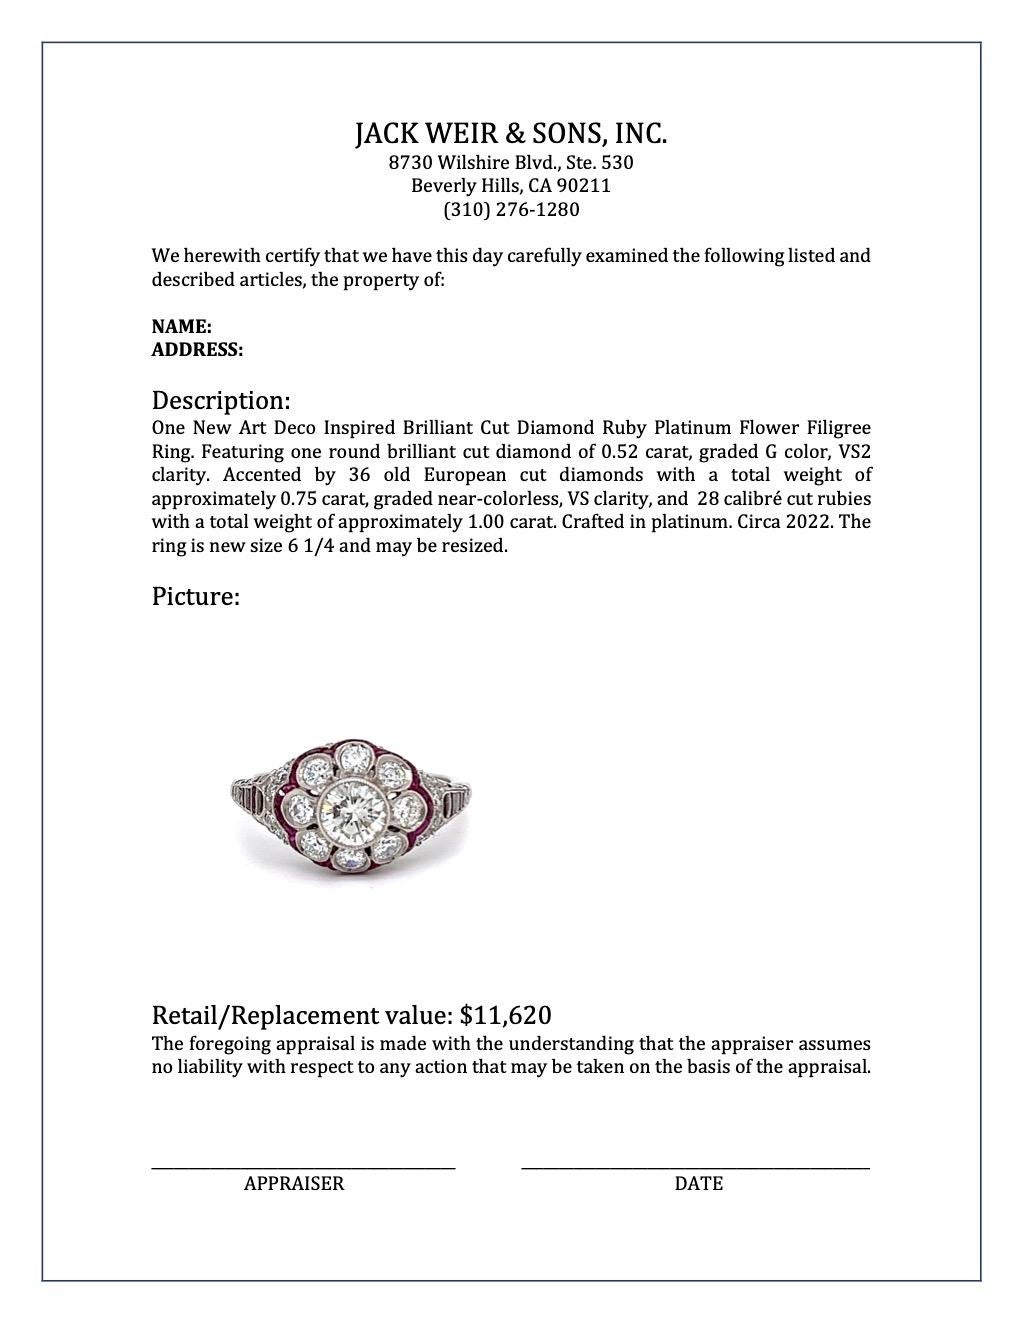 Art Deco Inspired Brilliant Cut Diamond Ruby Platinum Flower Filigree Ring For Sale 3